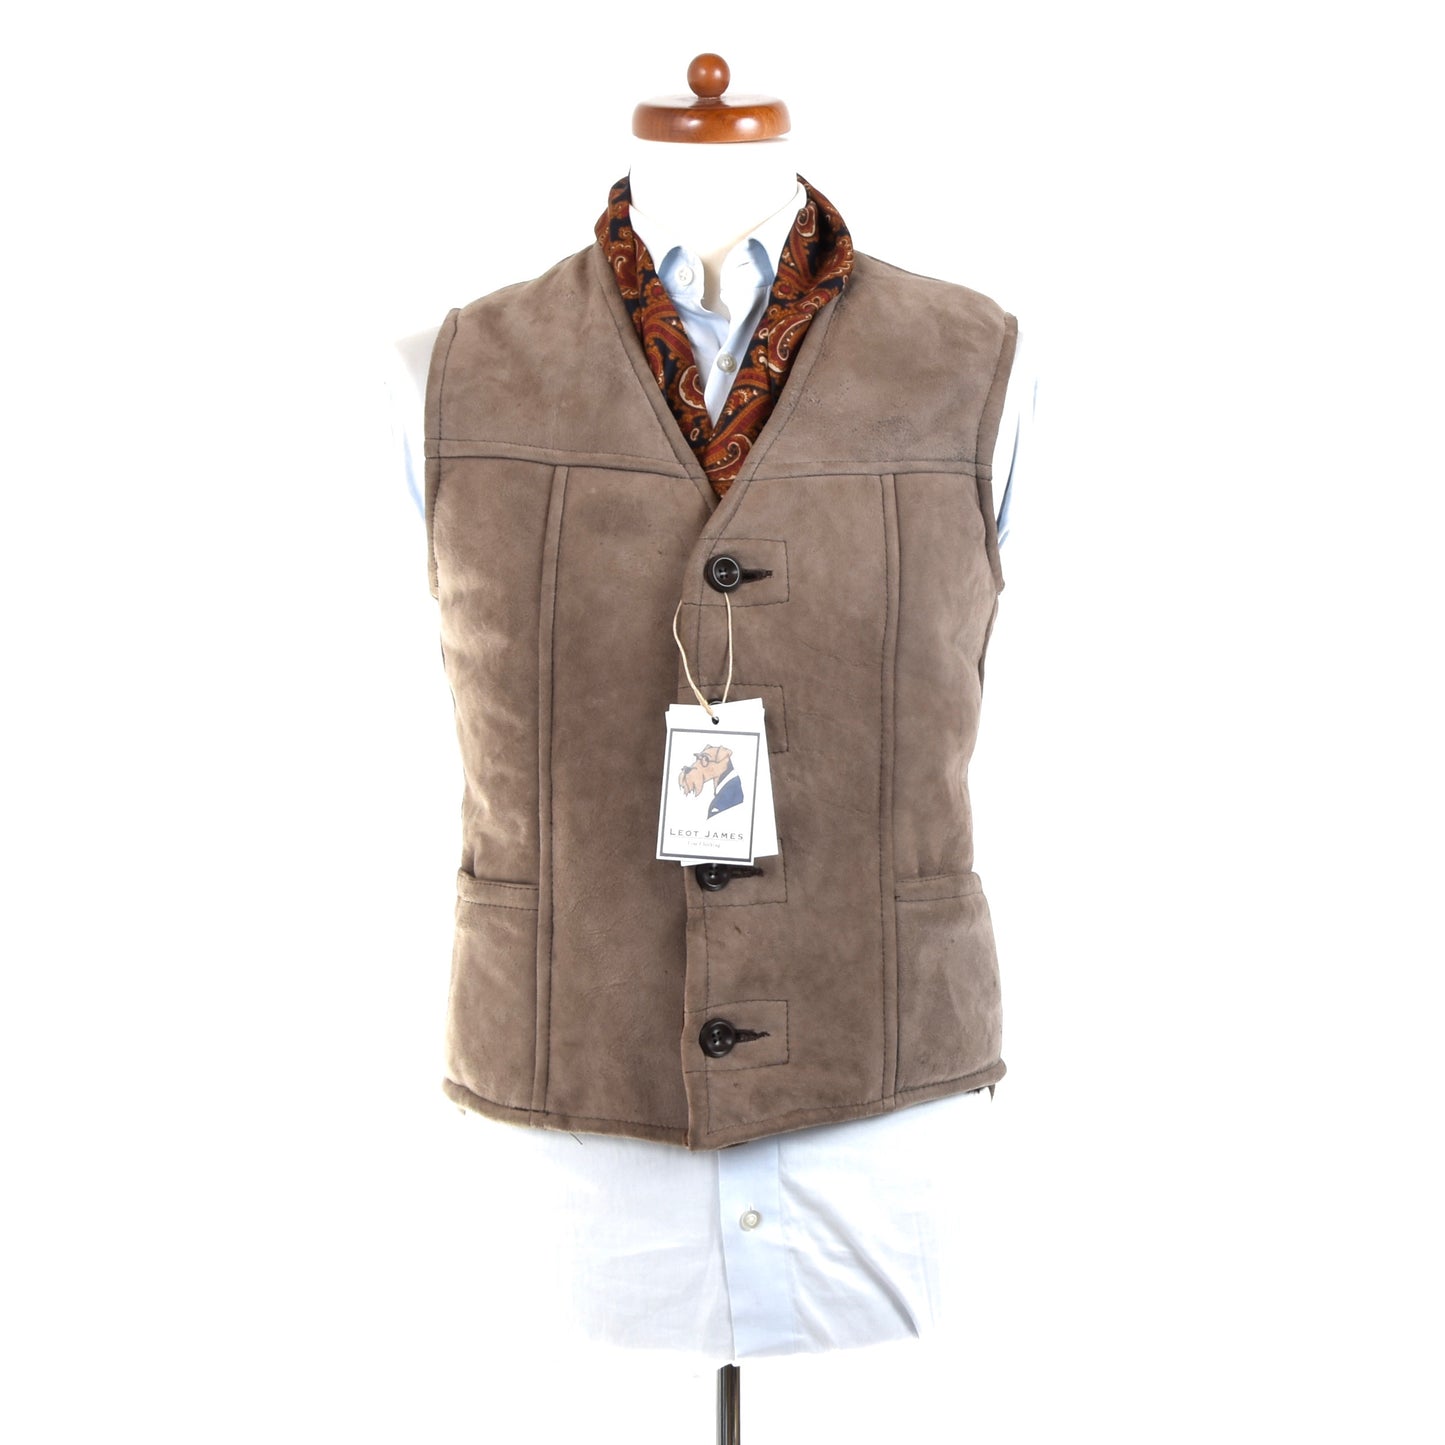 Hausmann Leder Shearling Vest/Gilet Size 46 - Brown/Tan